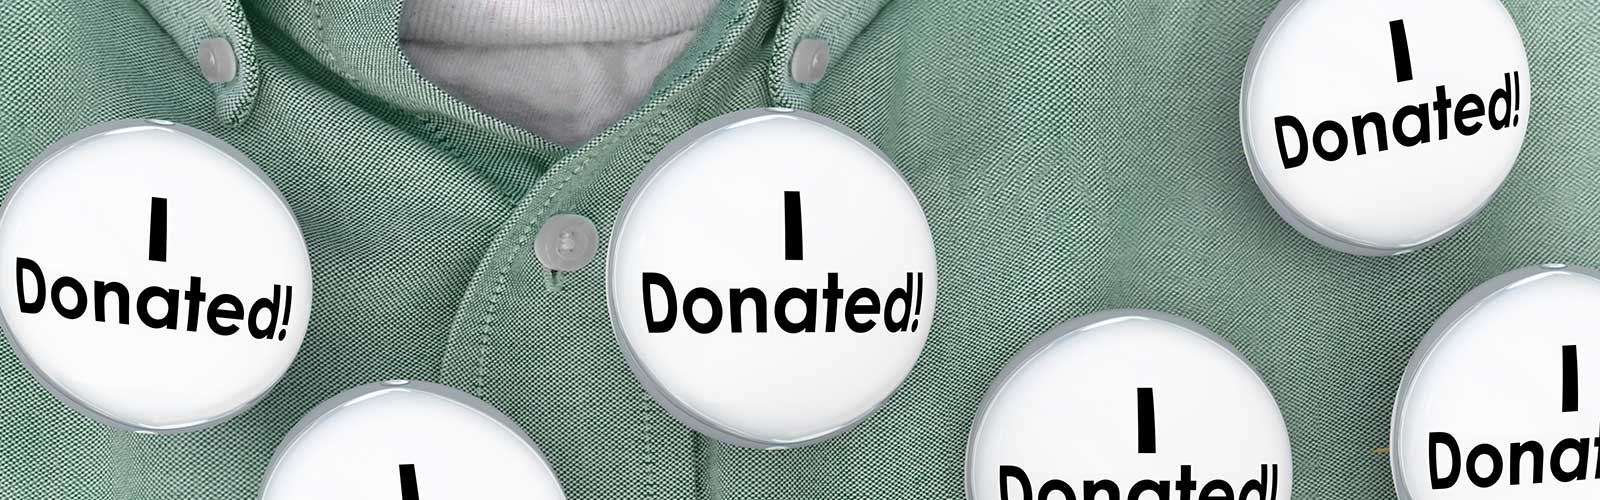 donate button header